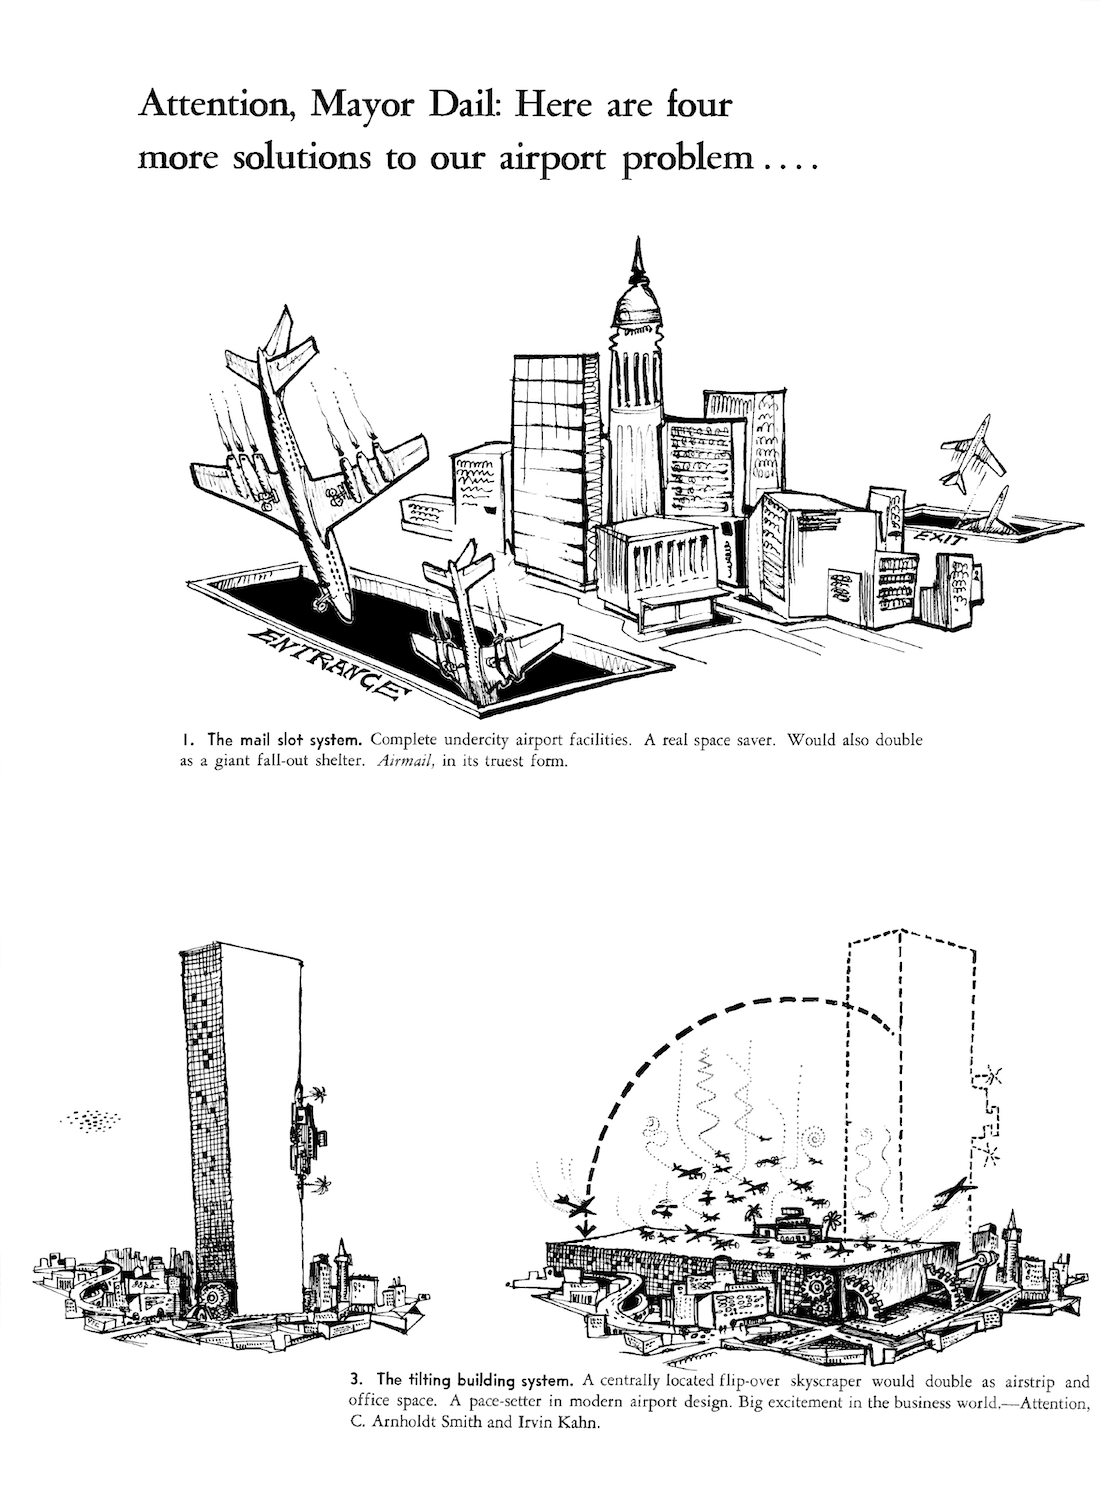 July 1960 (Airport Problem) San Diego Magazine Historical Cartoon